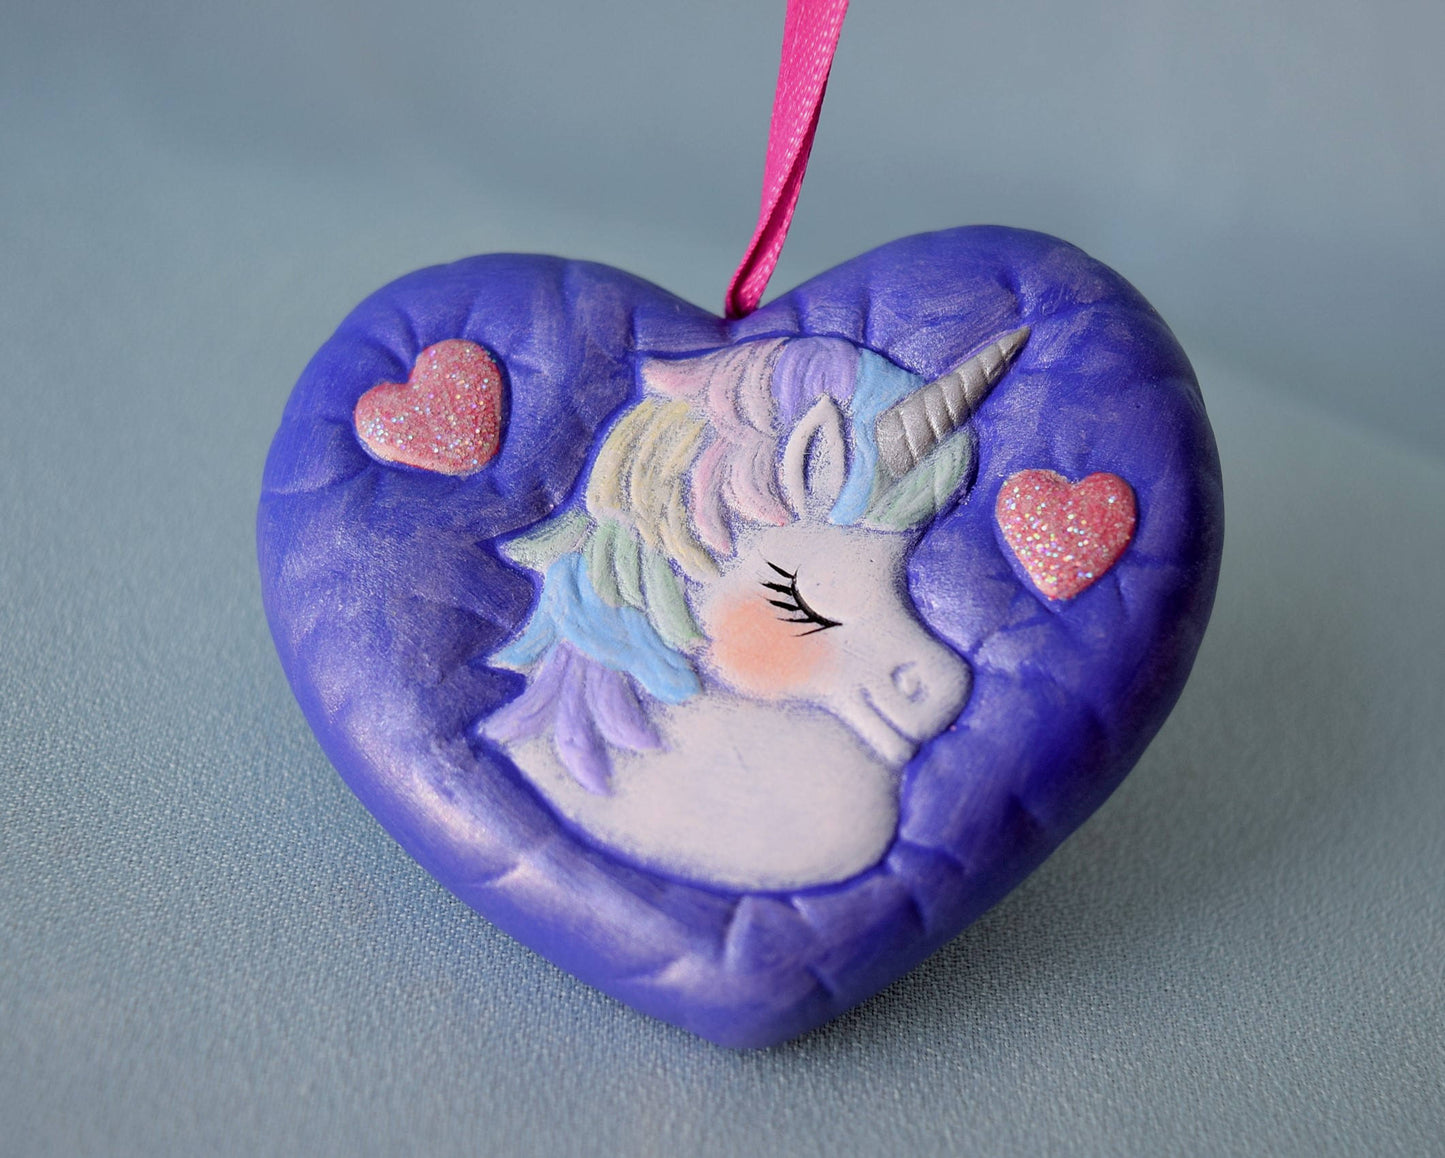 Unicorn Heart Necklace